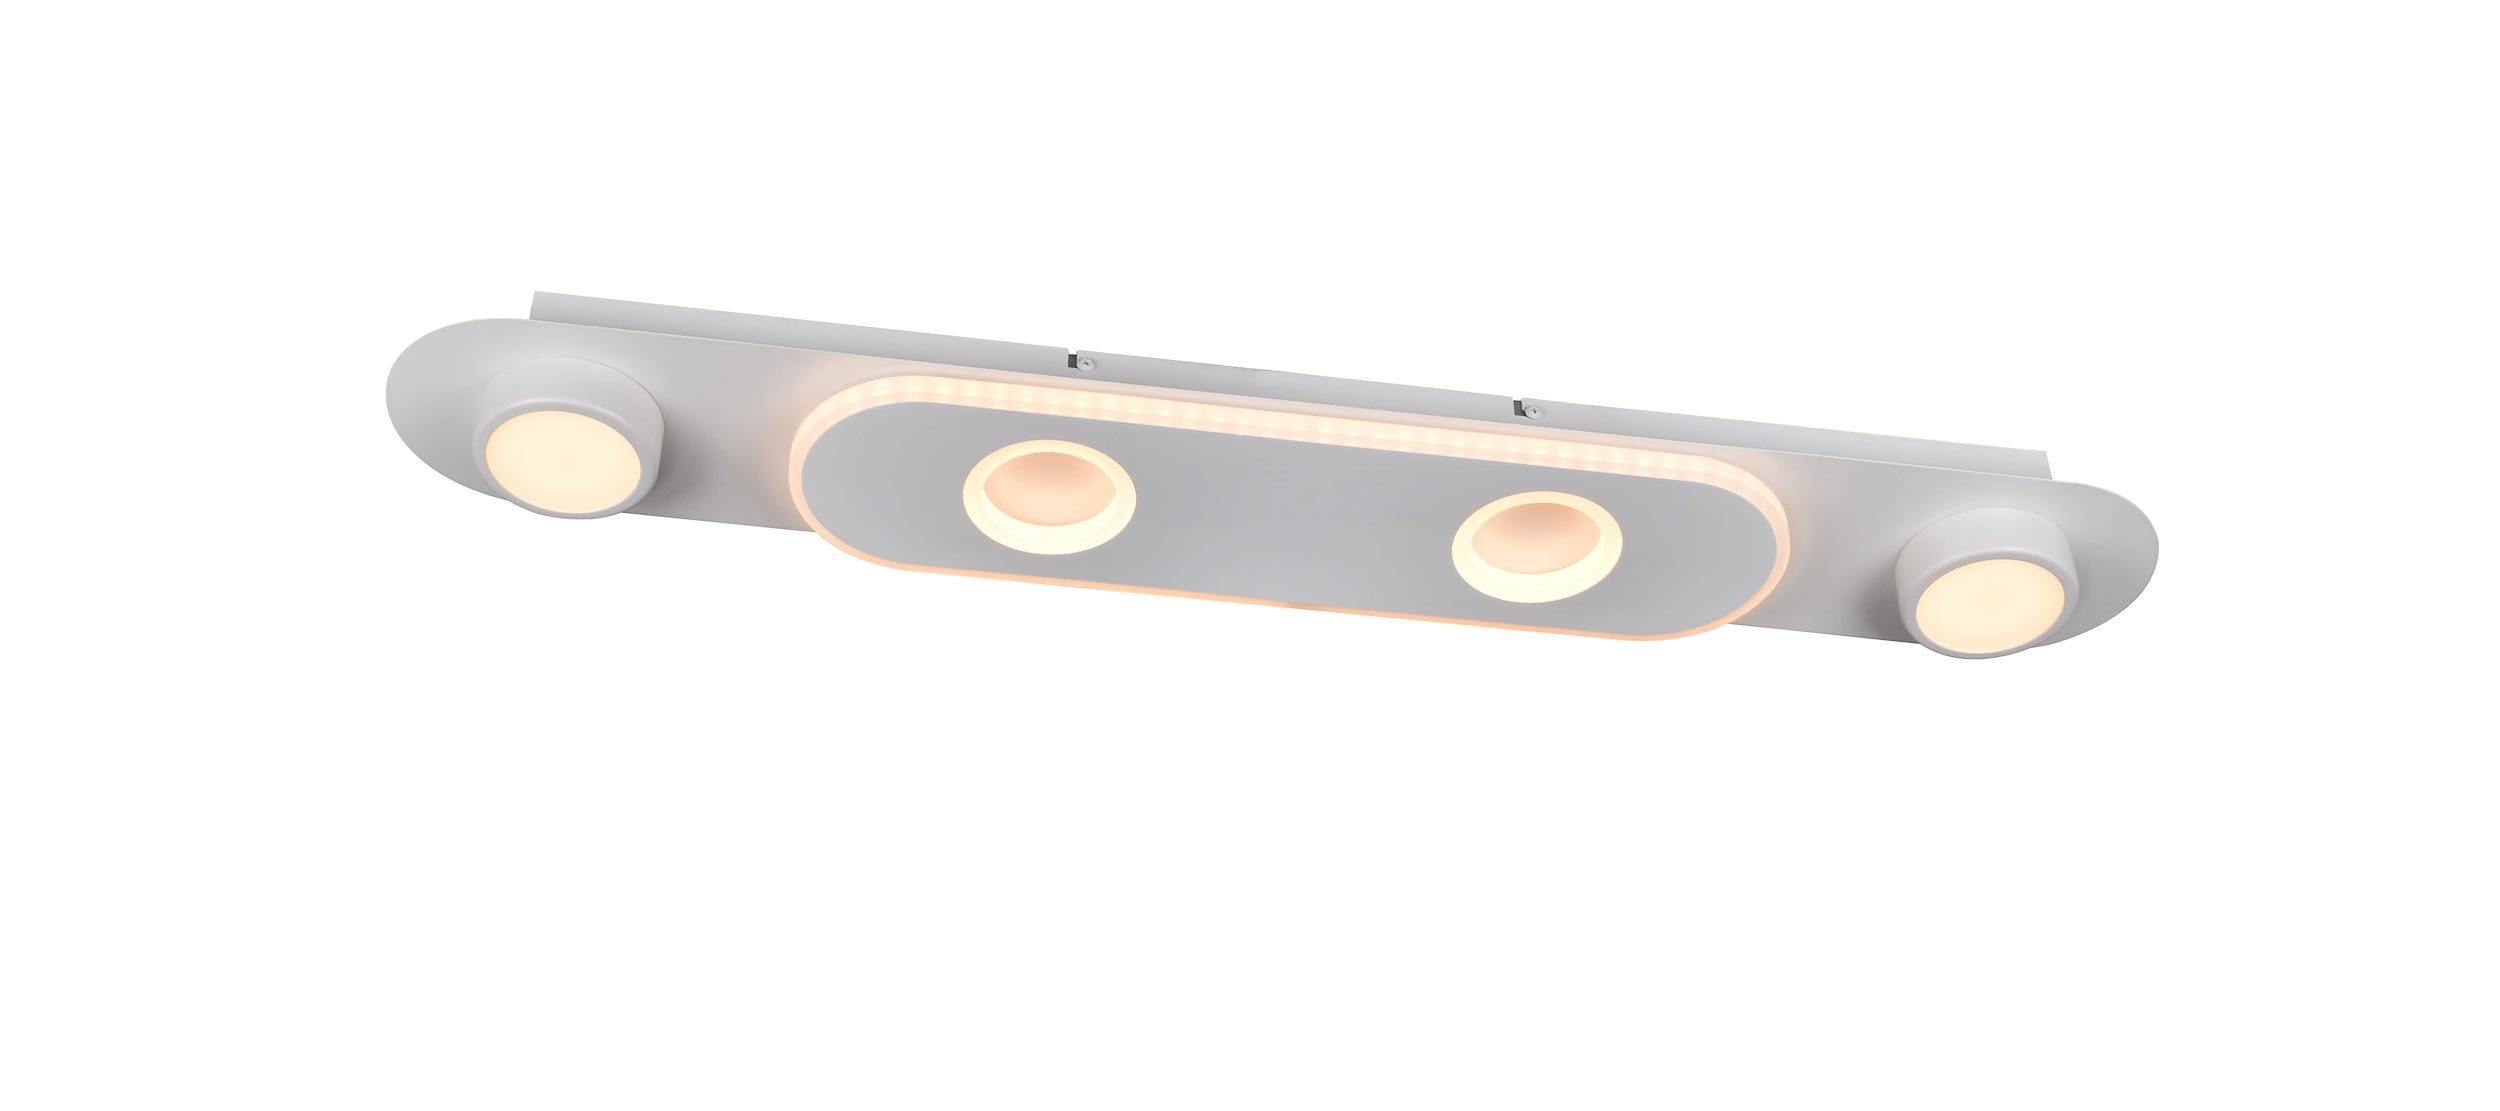 Brilliant Deckenleuchte Irelia, 3000K, Lampe, Irelia LED Spotbalken 4flg  weiß, 1x LED integriert, 30W LED int